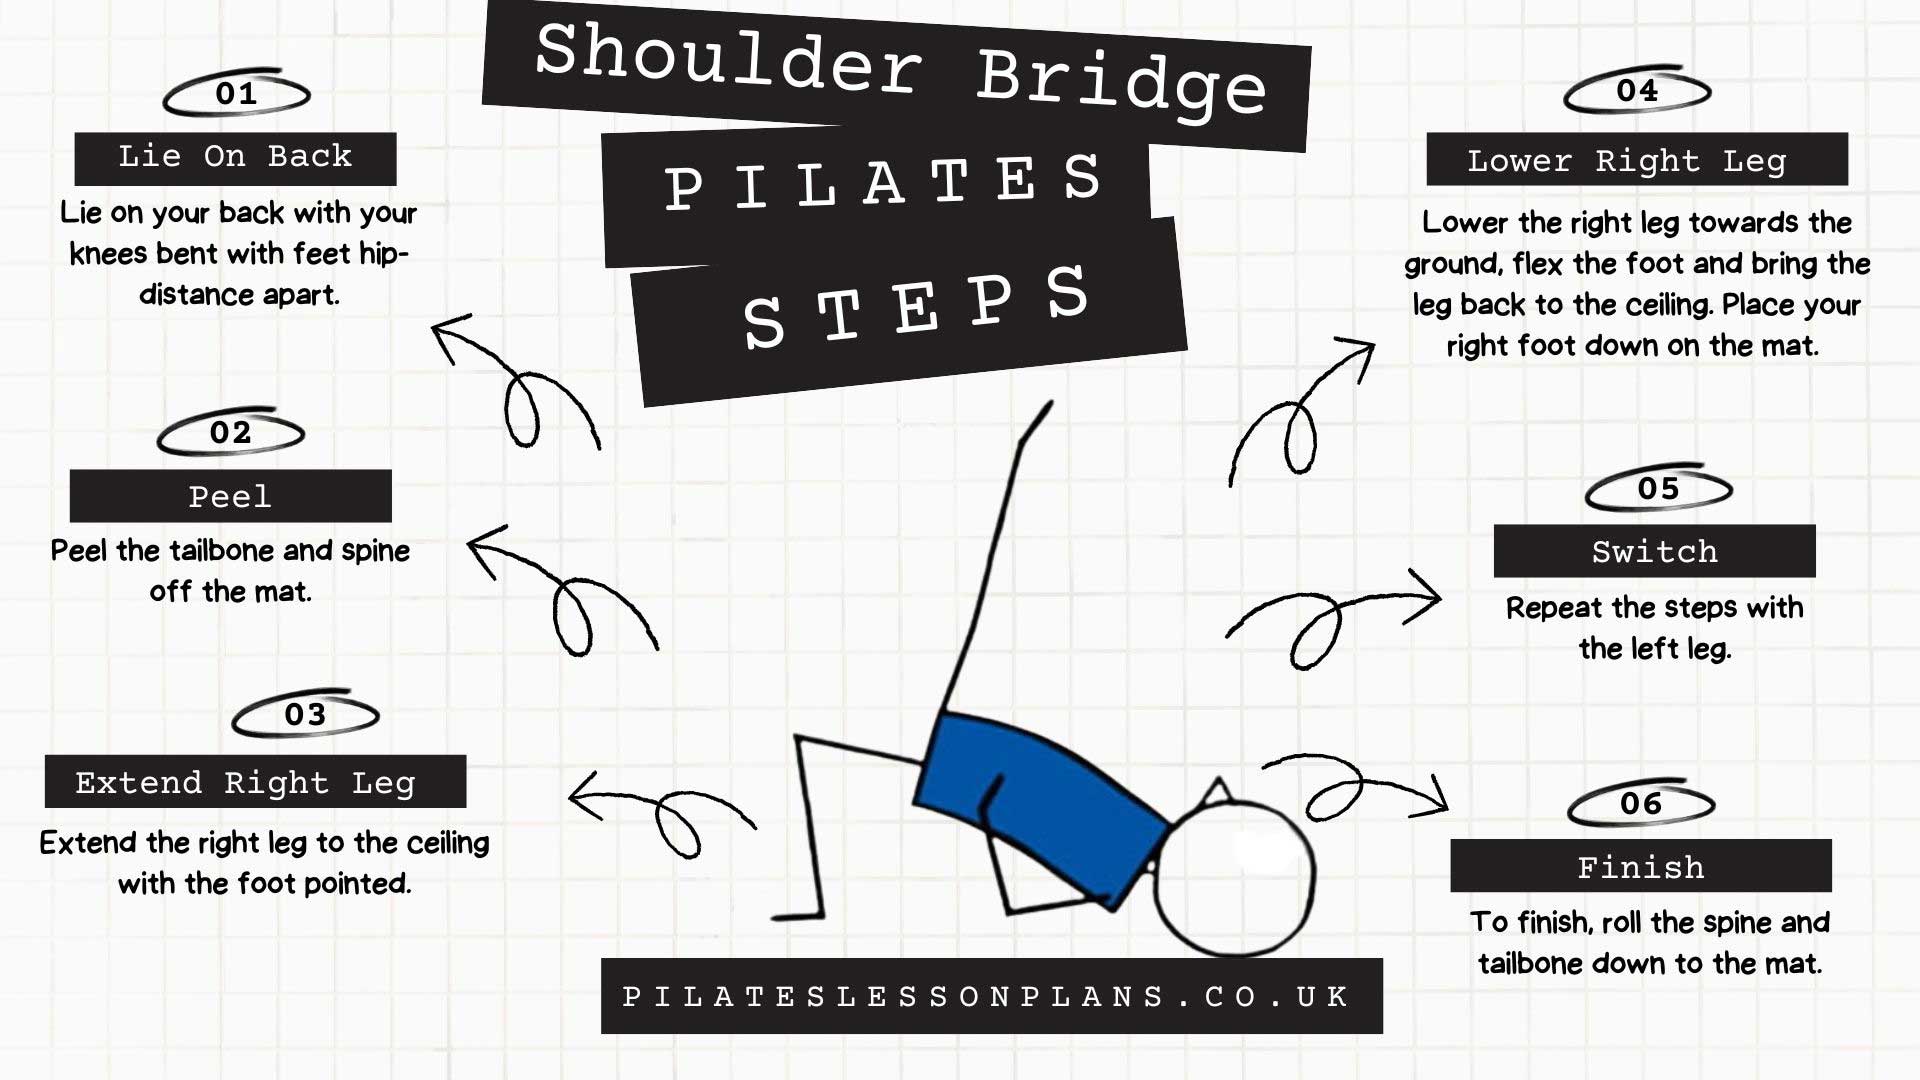 Shoulder Bridge Pilates Steps Infographic